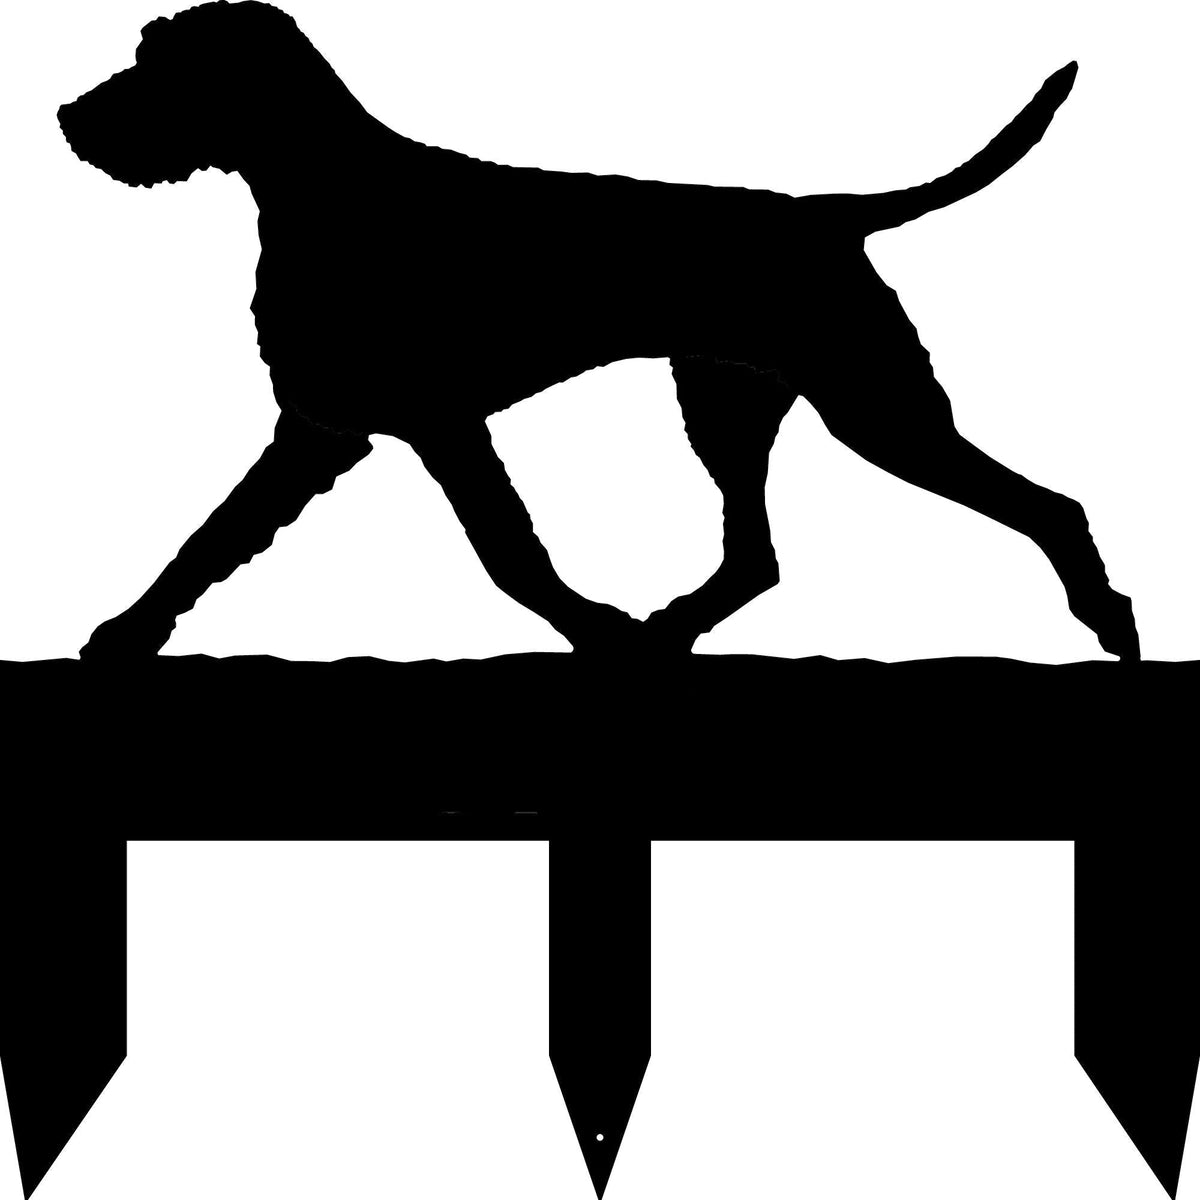 Vizsla (Wirehaired) dog address stake